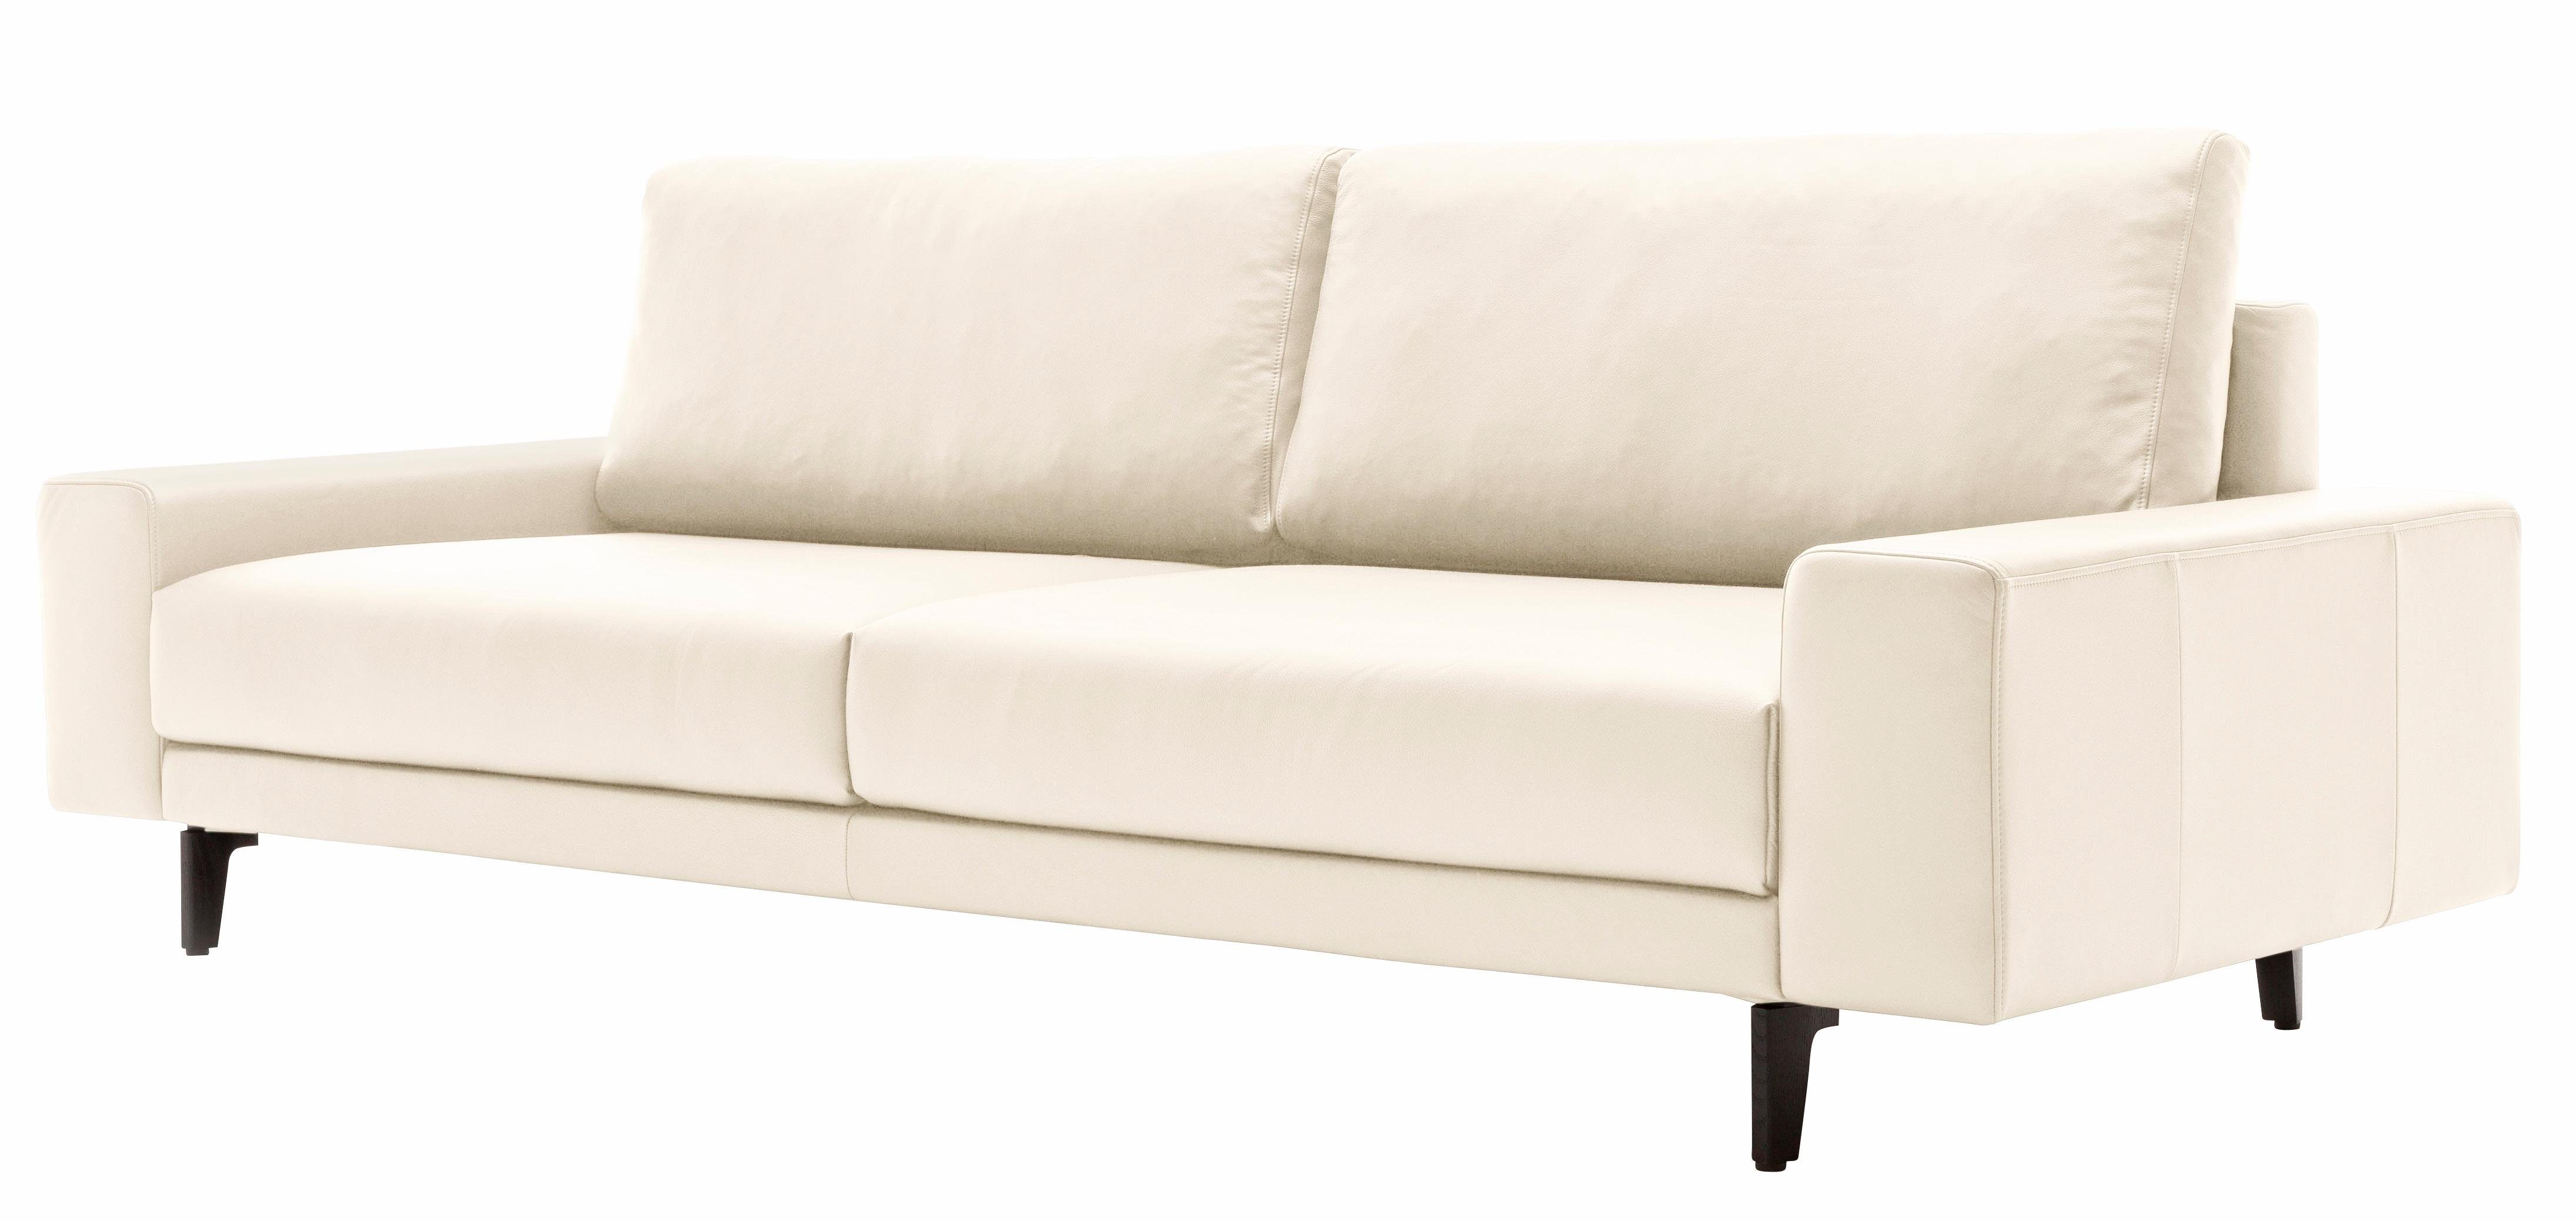 hülsta sofa 3-Sitzer hs.450, Armlehne breit niedrig, Alugussfüße in umbragrau, Breite 220 cm